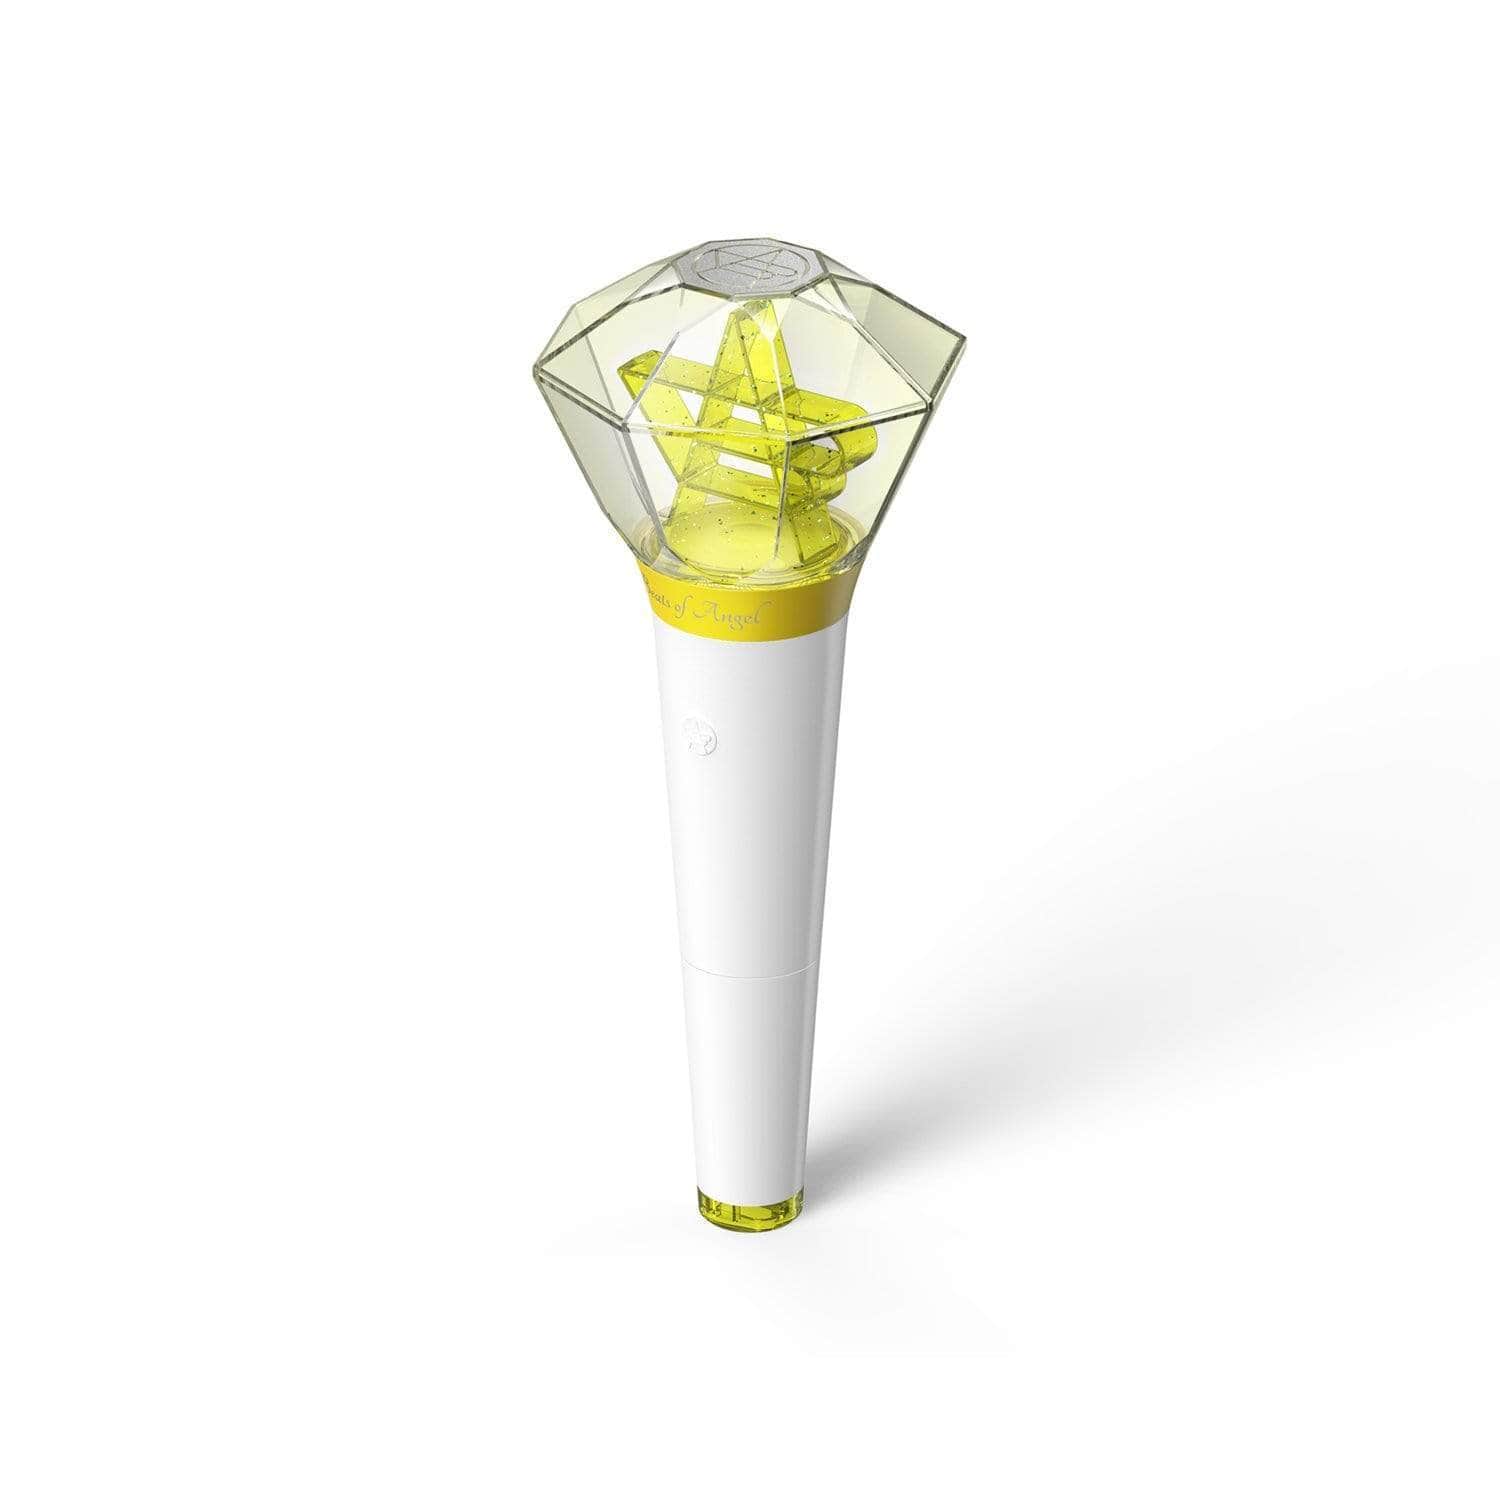 BoA Official Fanlight (Lightstick) - SM Global Shop